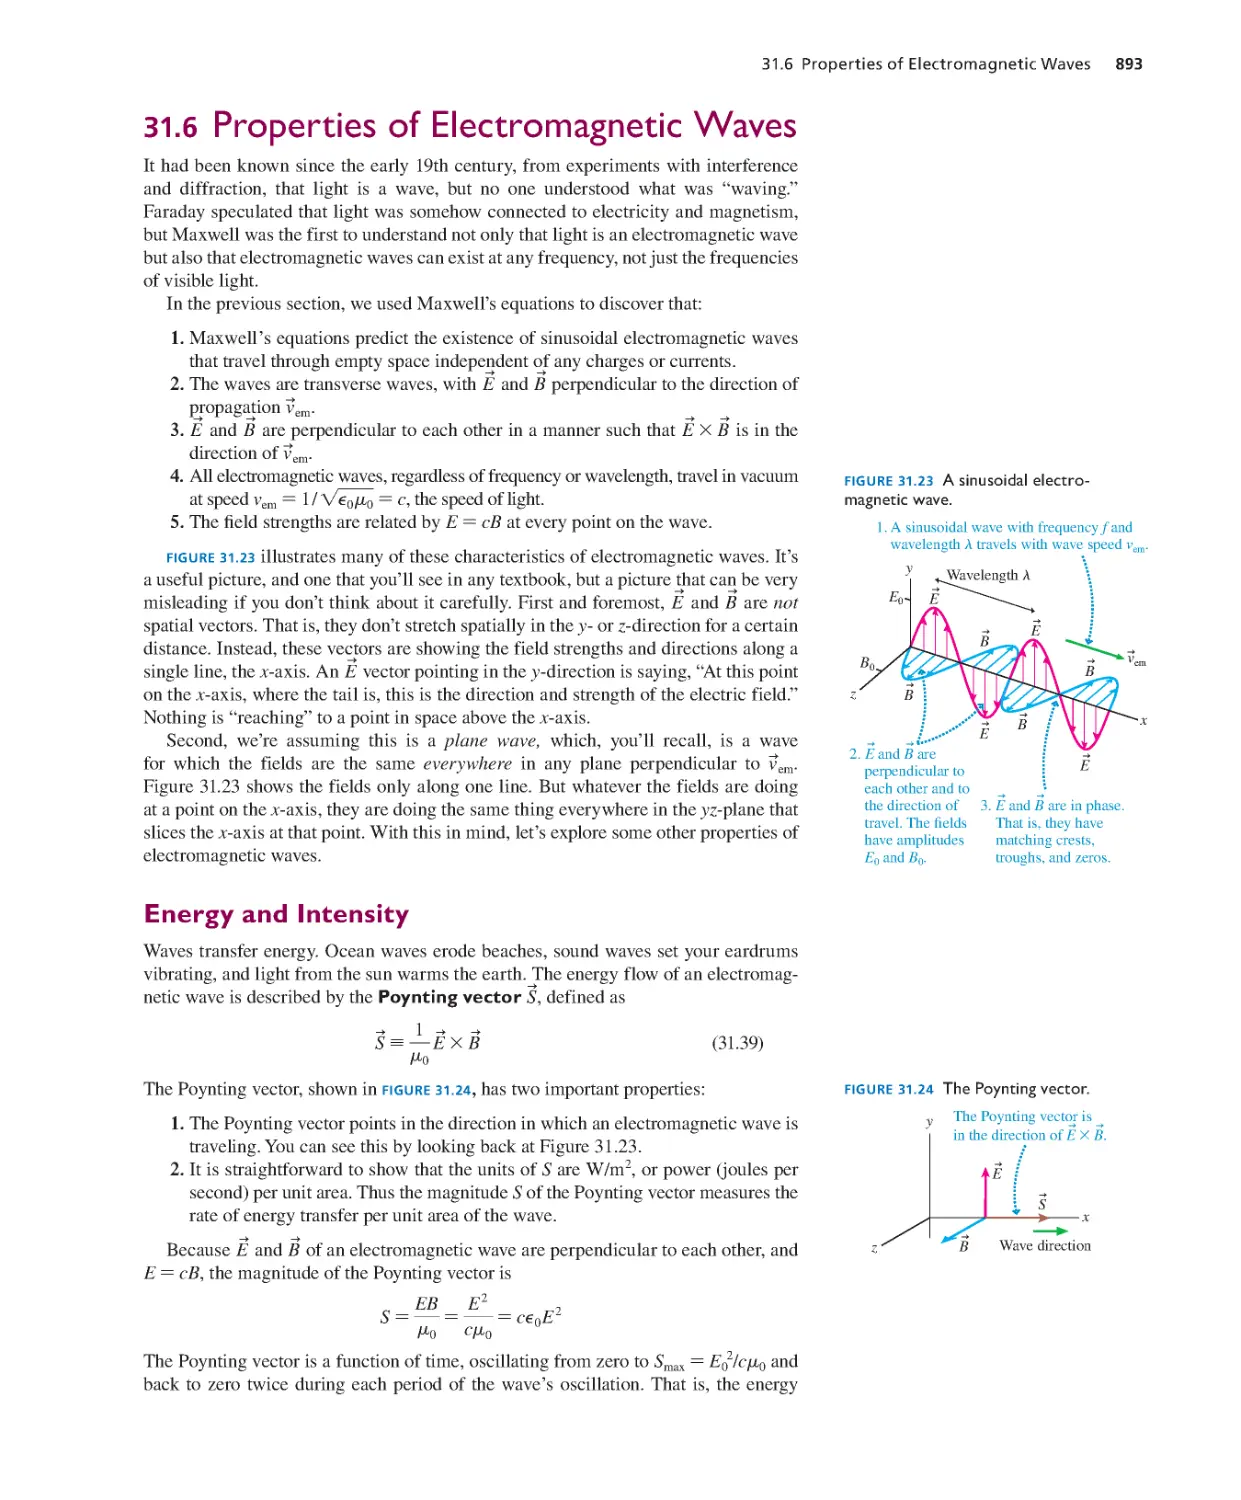 31.6. Properties of Electromagnetic Waves